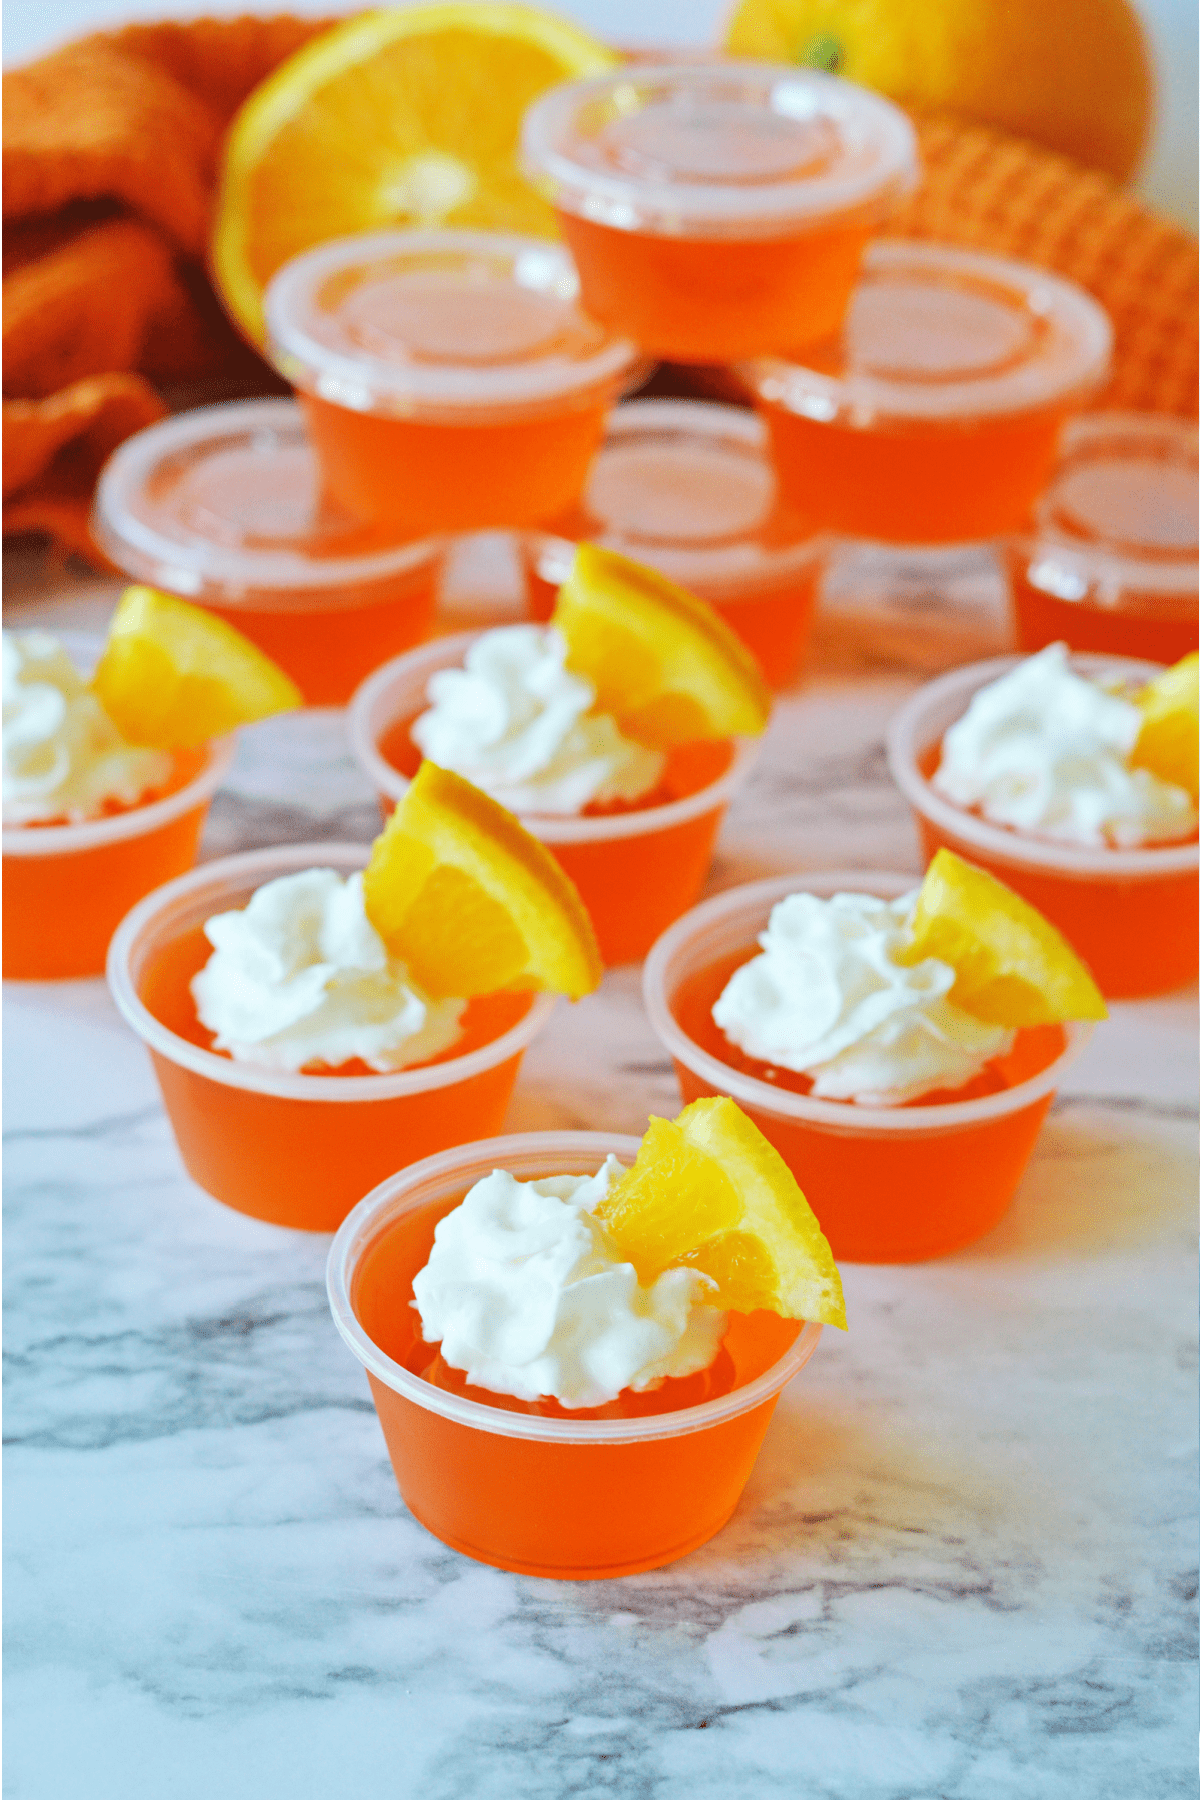 Orange creamsicle jello shots with whipped cream and orange slice